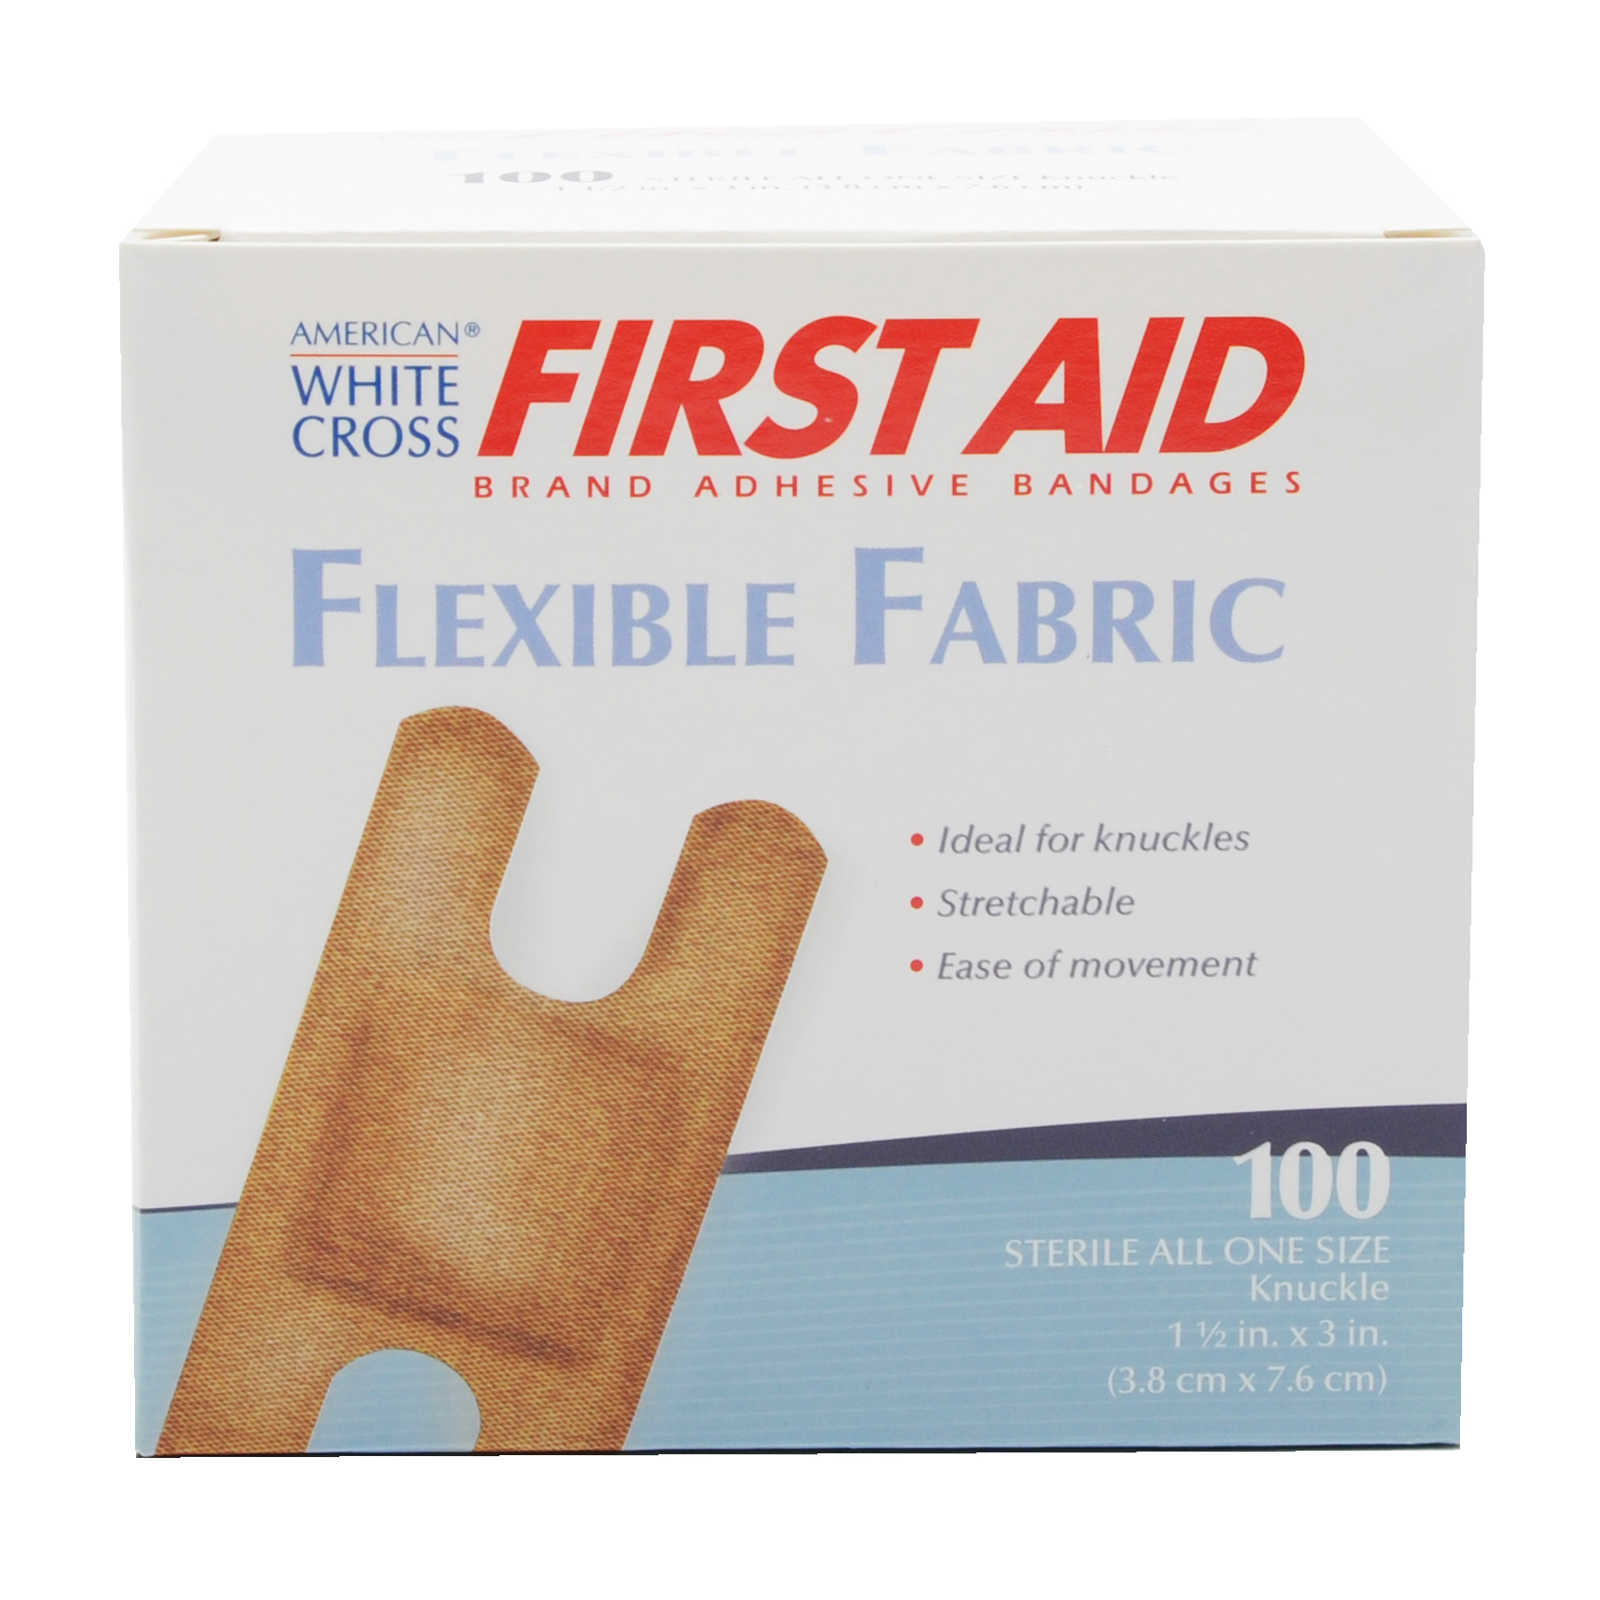 Fabric Knuckle Bandage White Cross | MFASCO Health & Safety